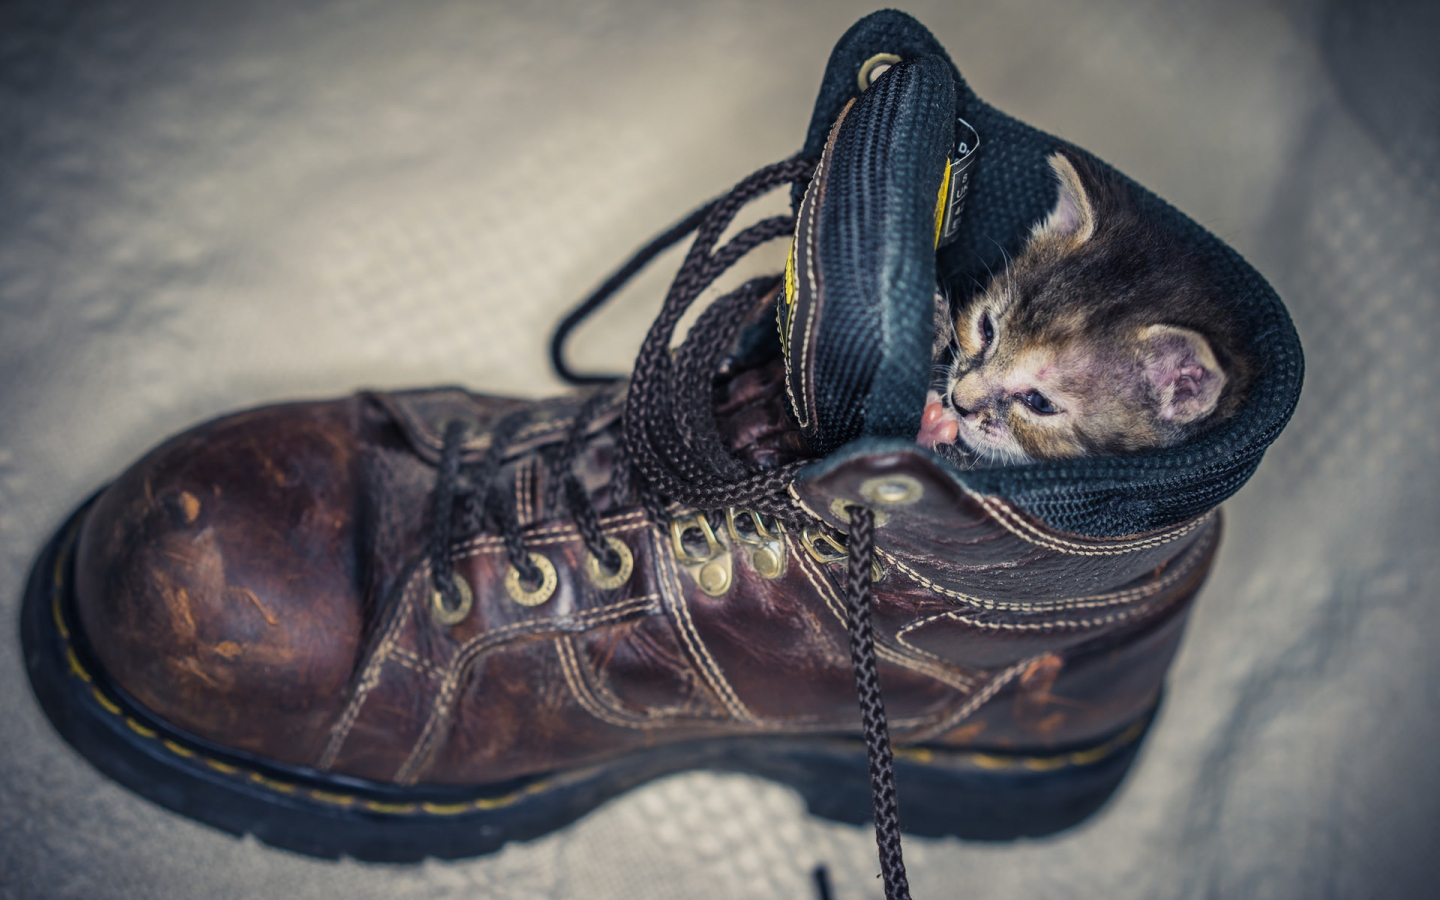 Kitten in Shoe for 1440 x 900 widescreen resolution